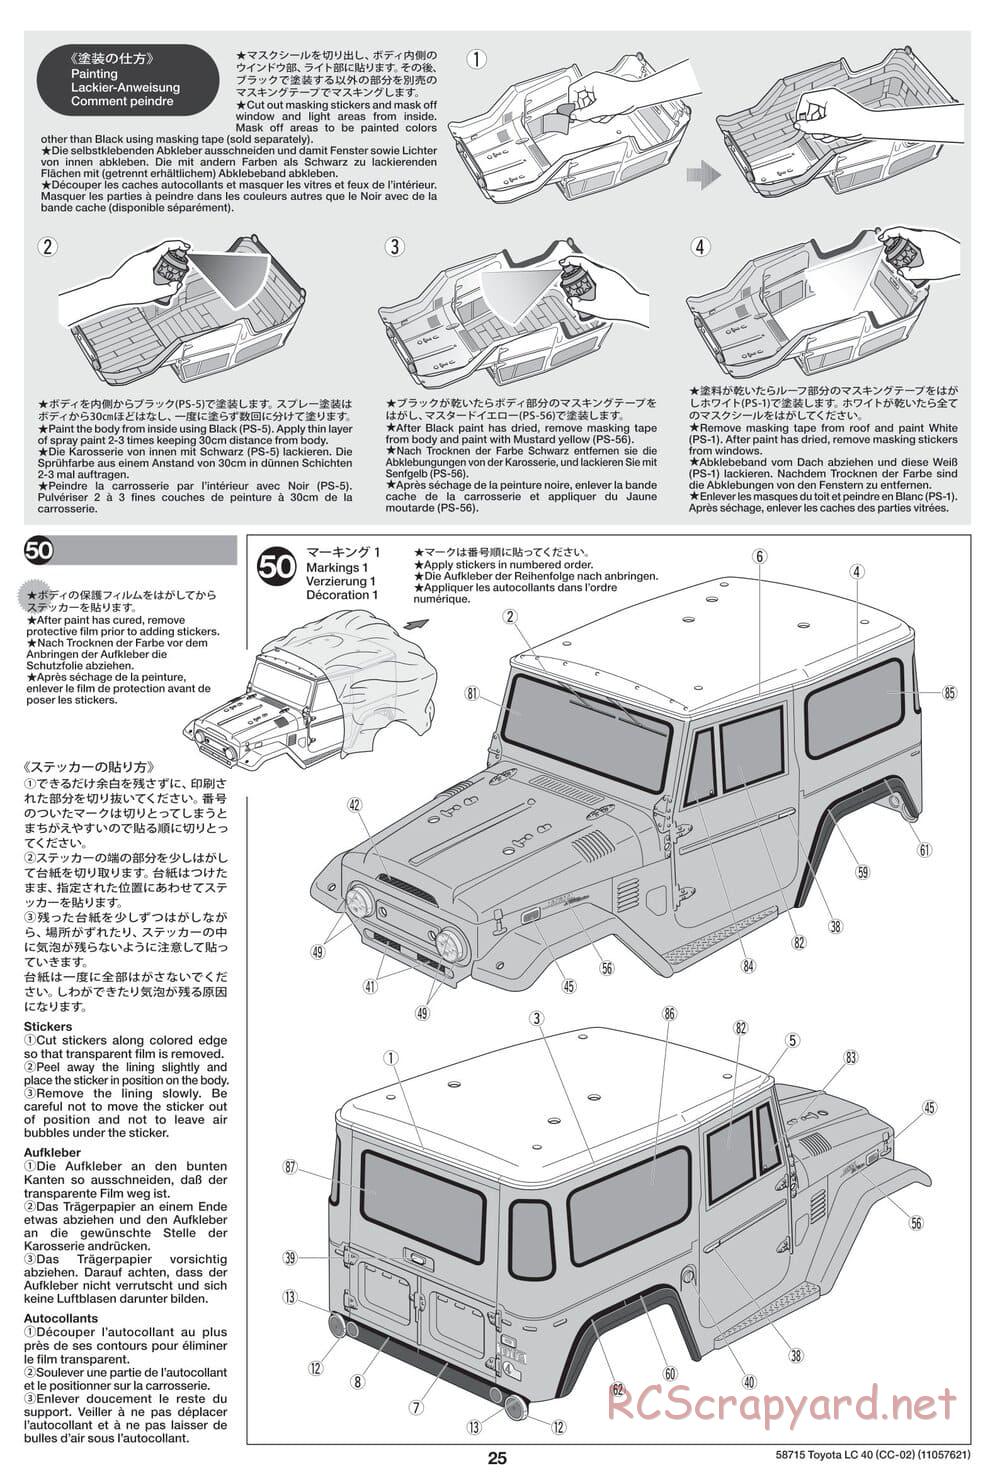 Tamiya - Toyota Land Cruiser 40 - CC-02 Chassis - Manual - Page 25